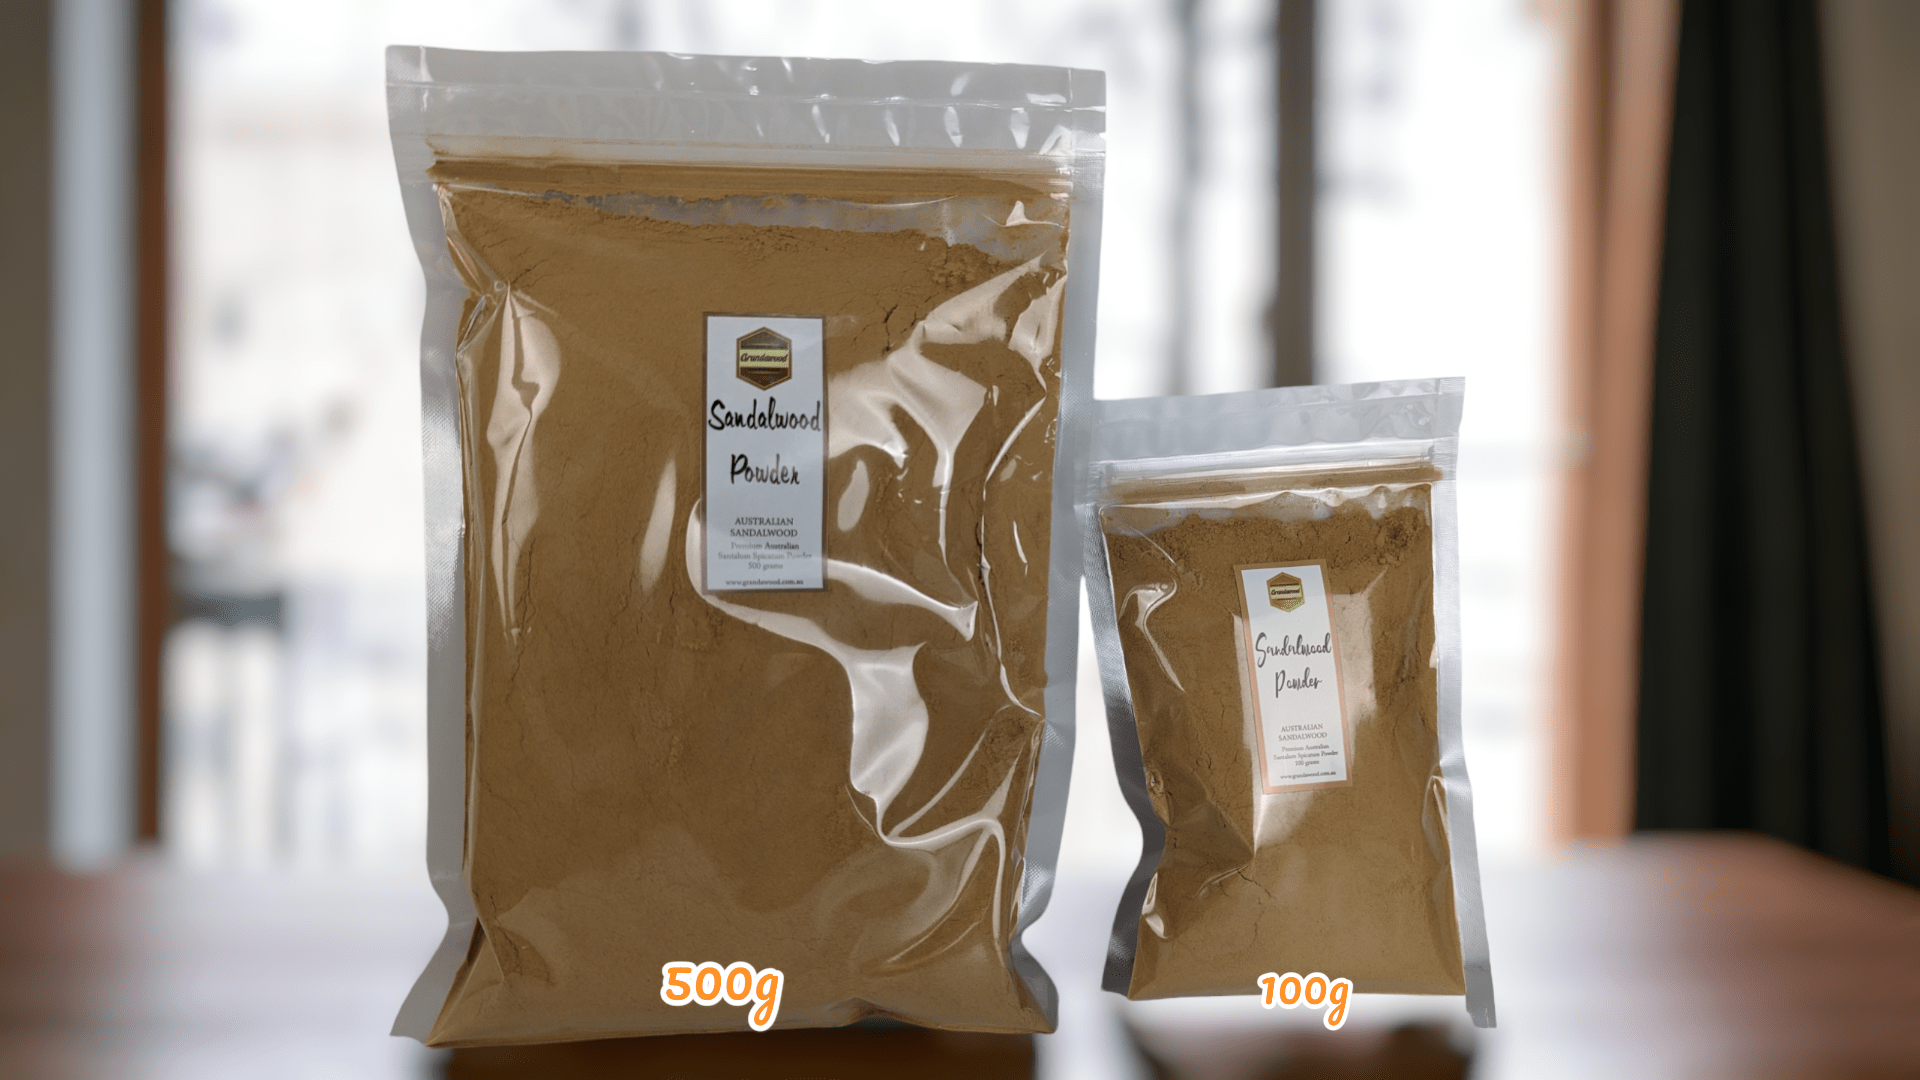 Golden Harvest Premium Australian Sandalwood Powder -